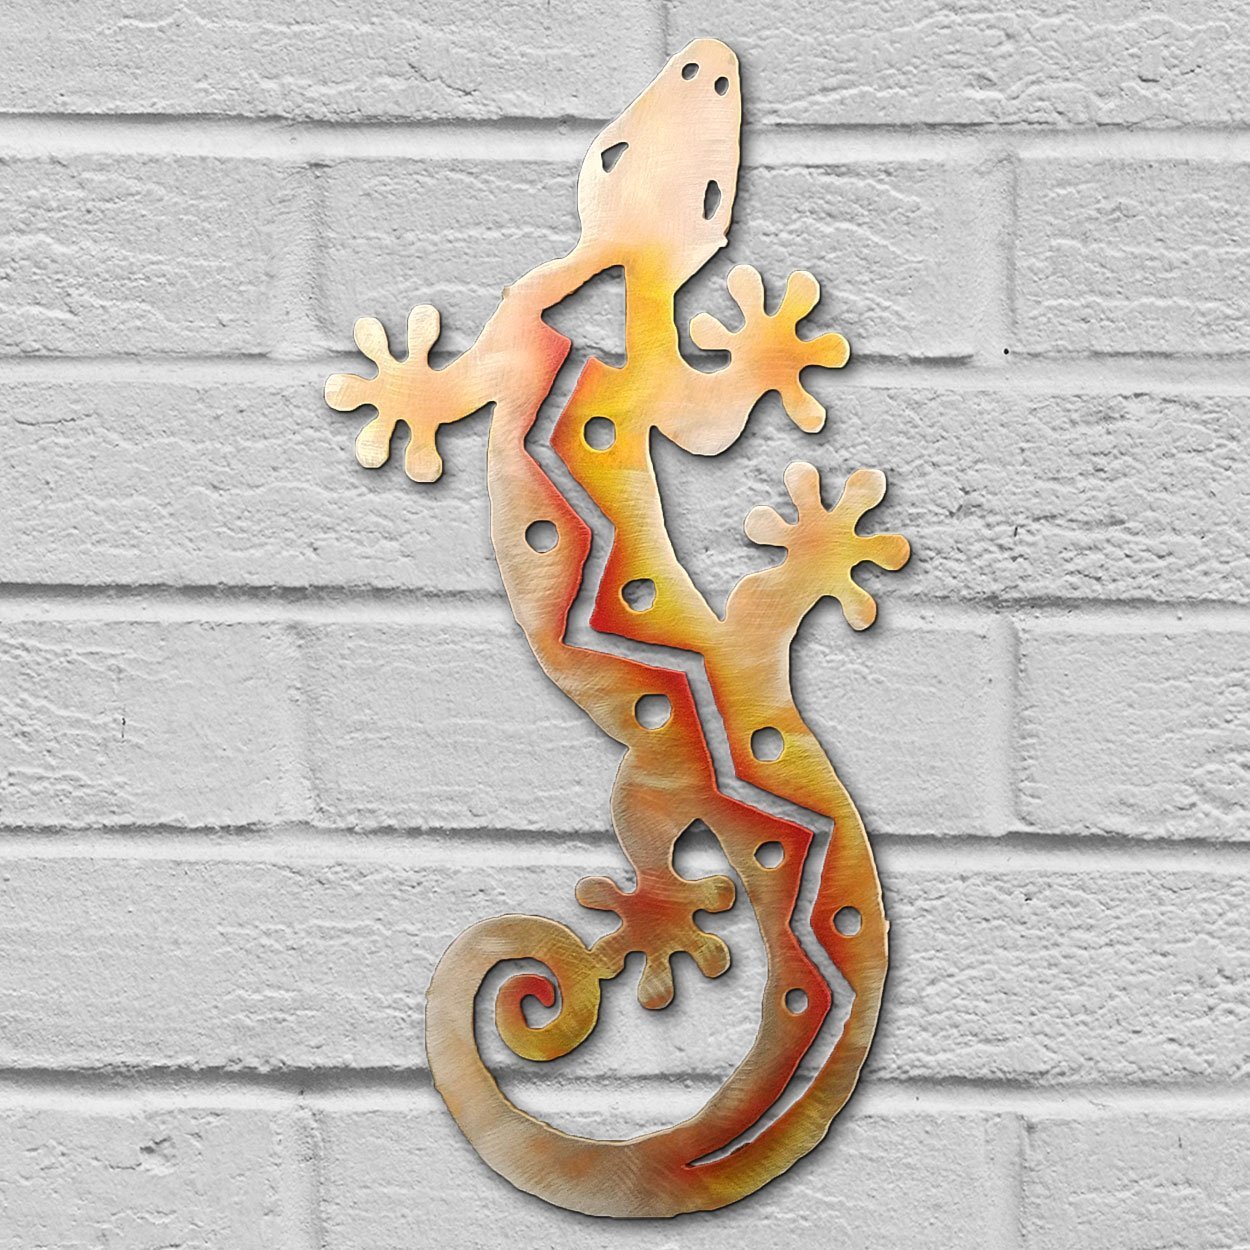 165031 - 12in S-Shaped Lizard 3D Southwest Metal Wall Art in Sunset Finish